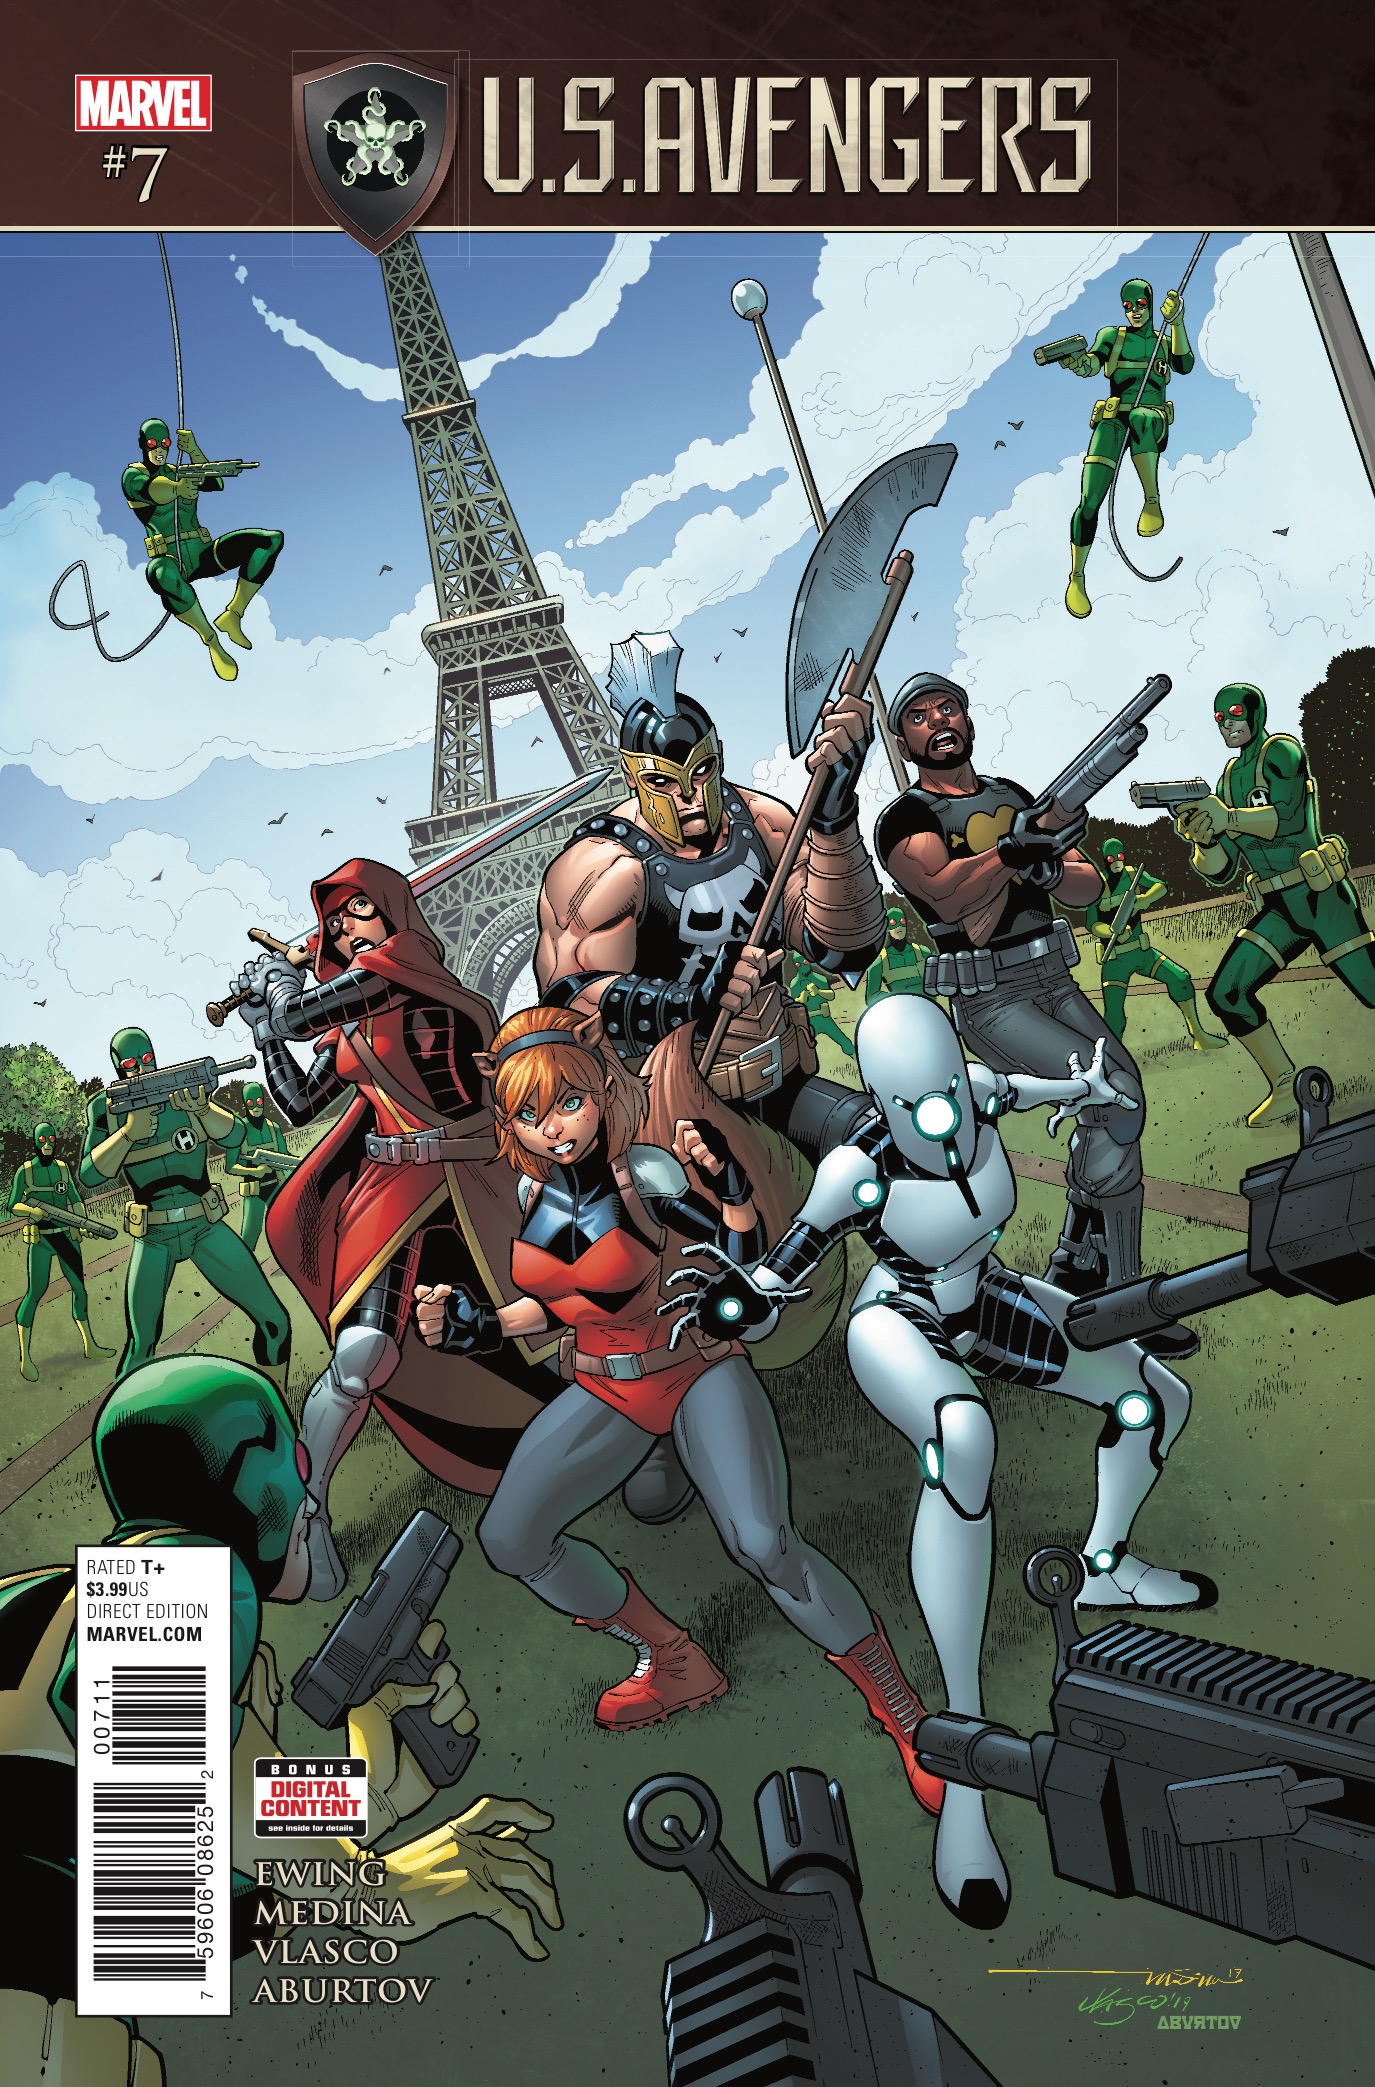 U.S. Avengers #7 Review